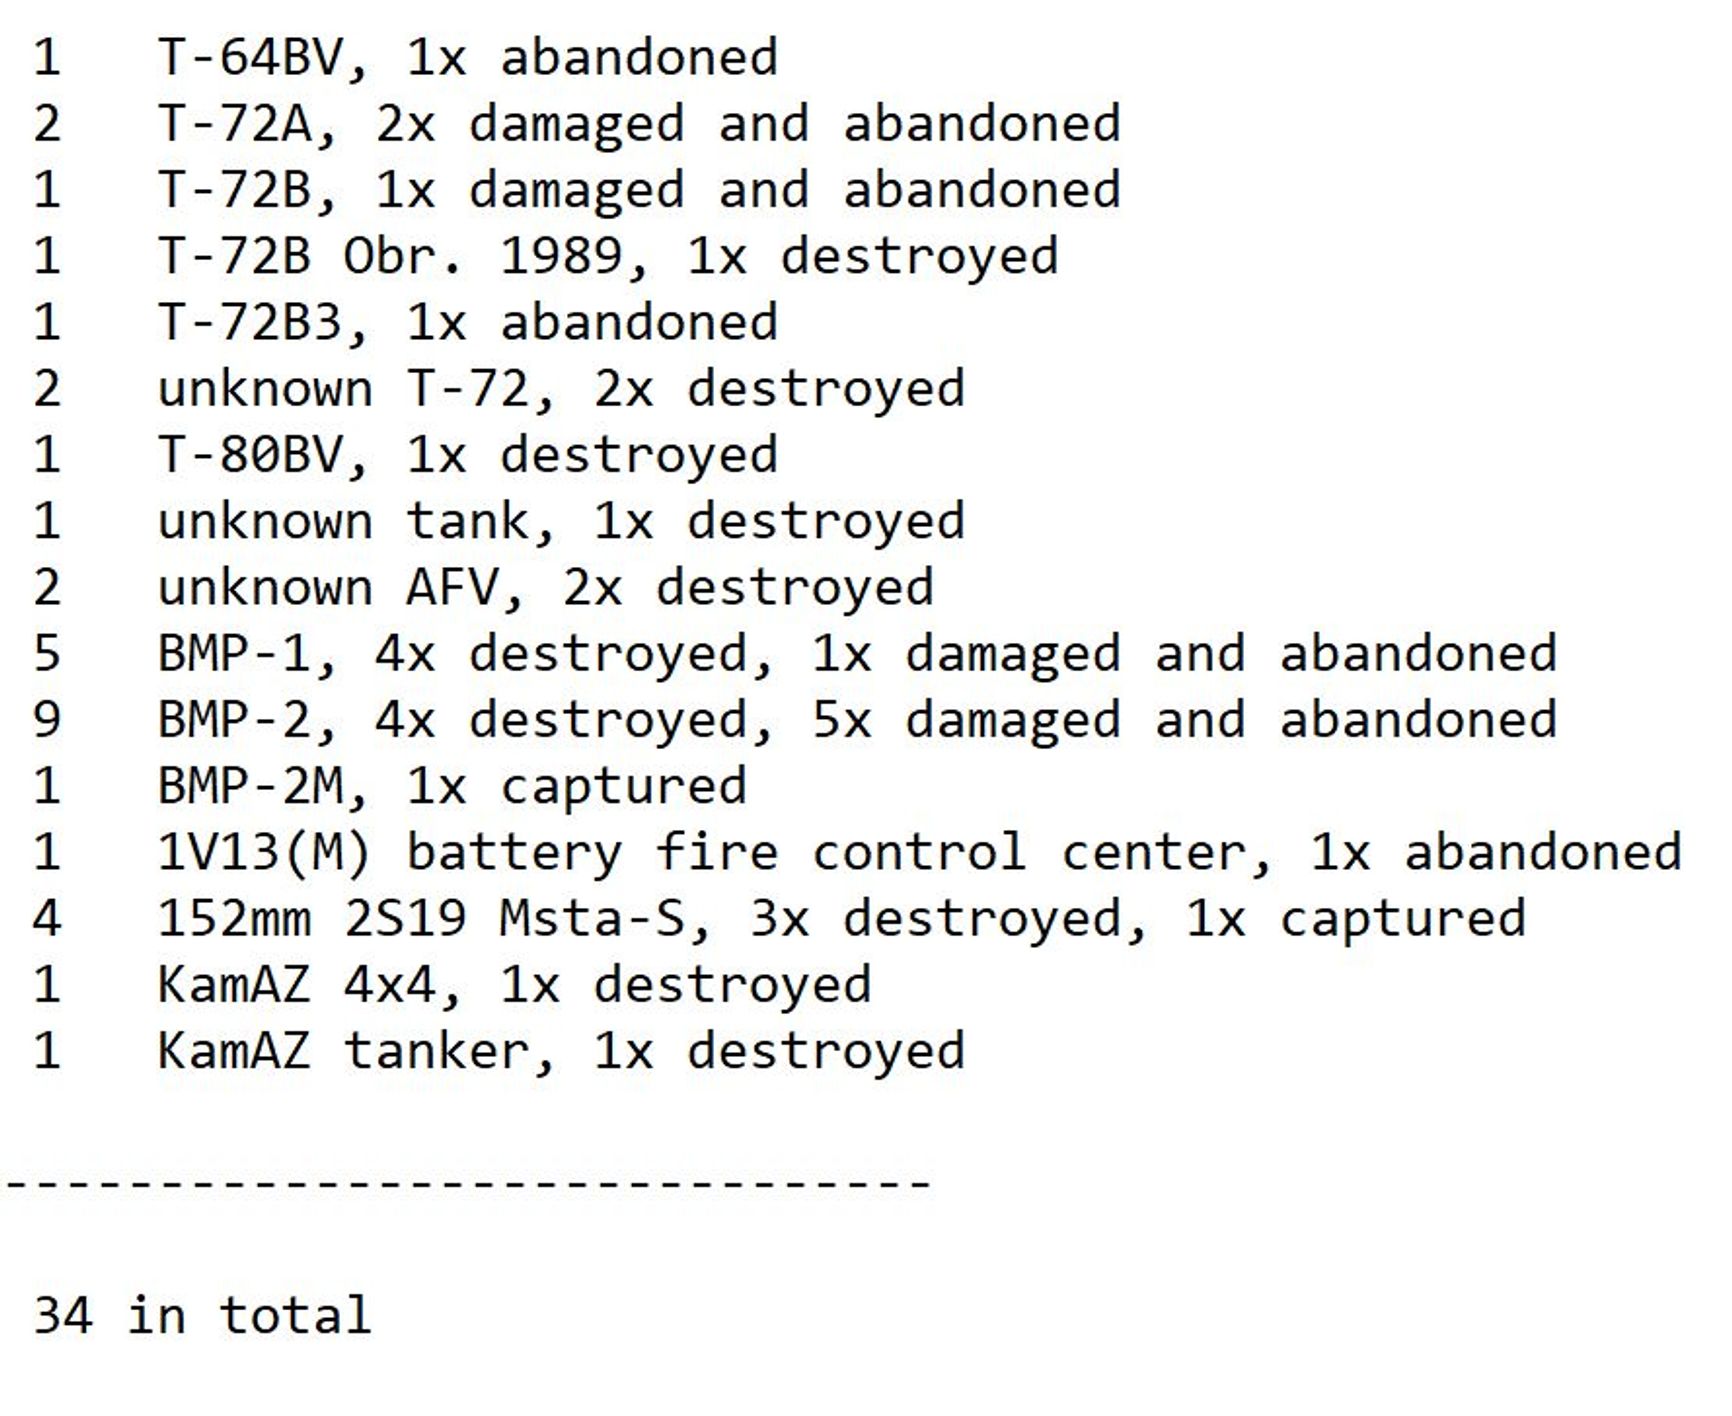 За три дня наступления на Авдеевку и Угледар Россия потеряла более 100 единиц техники, включая 36 танков — Oryx